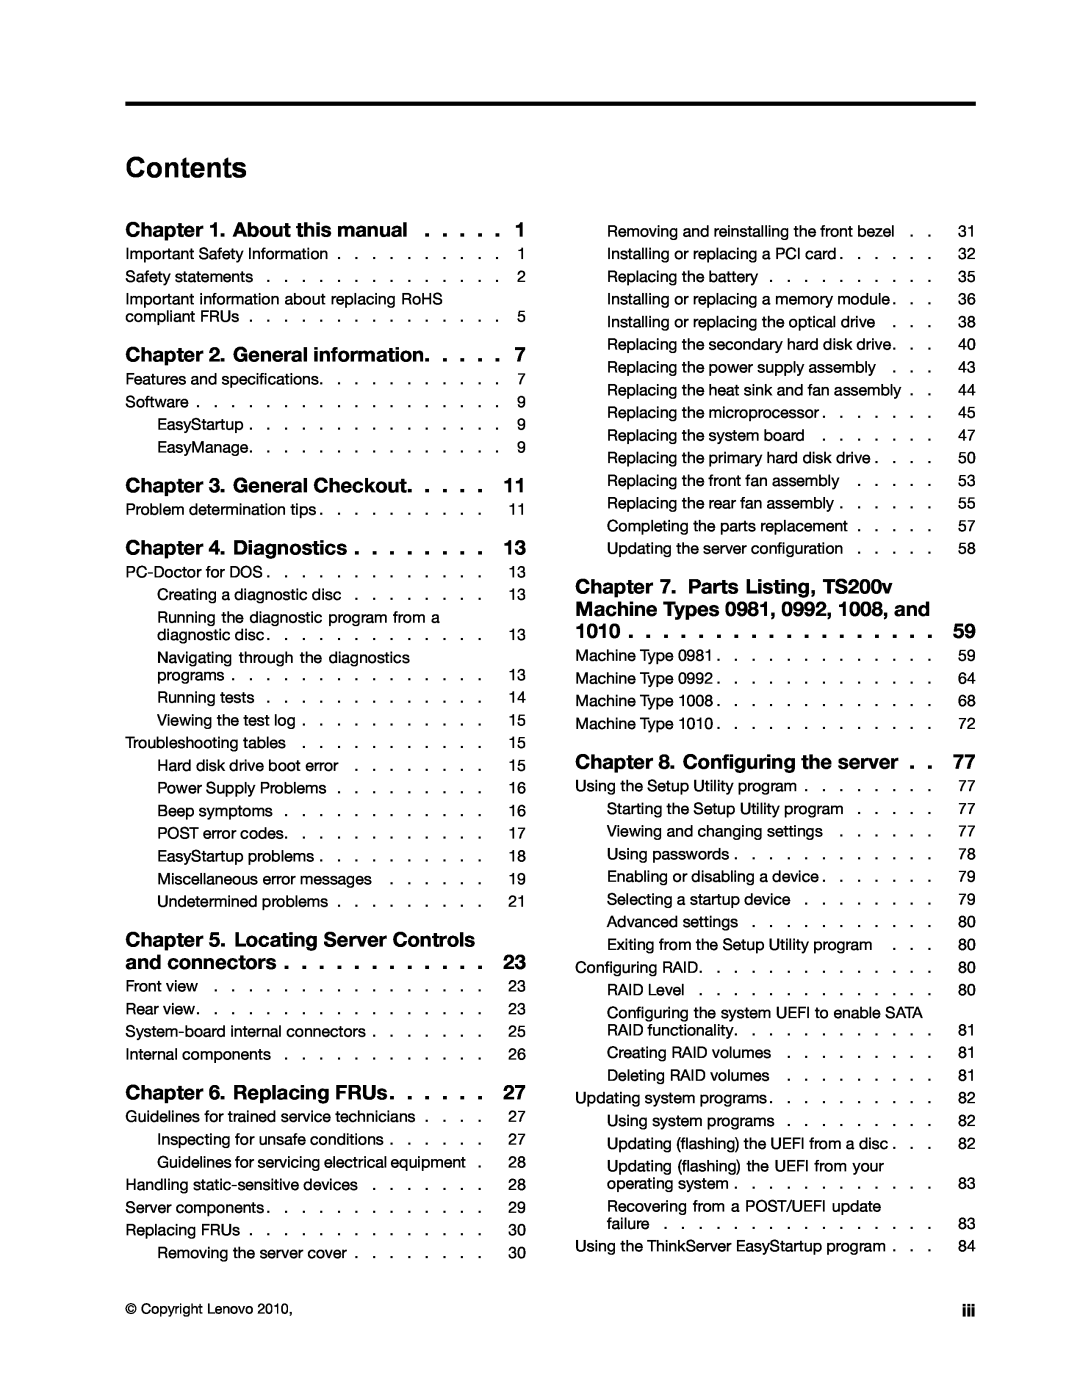 Lenovo 981, 992, 1008, 1010 manual Contents 